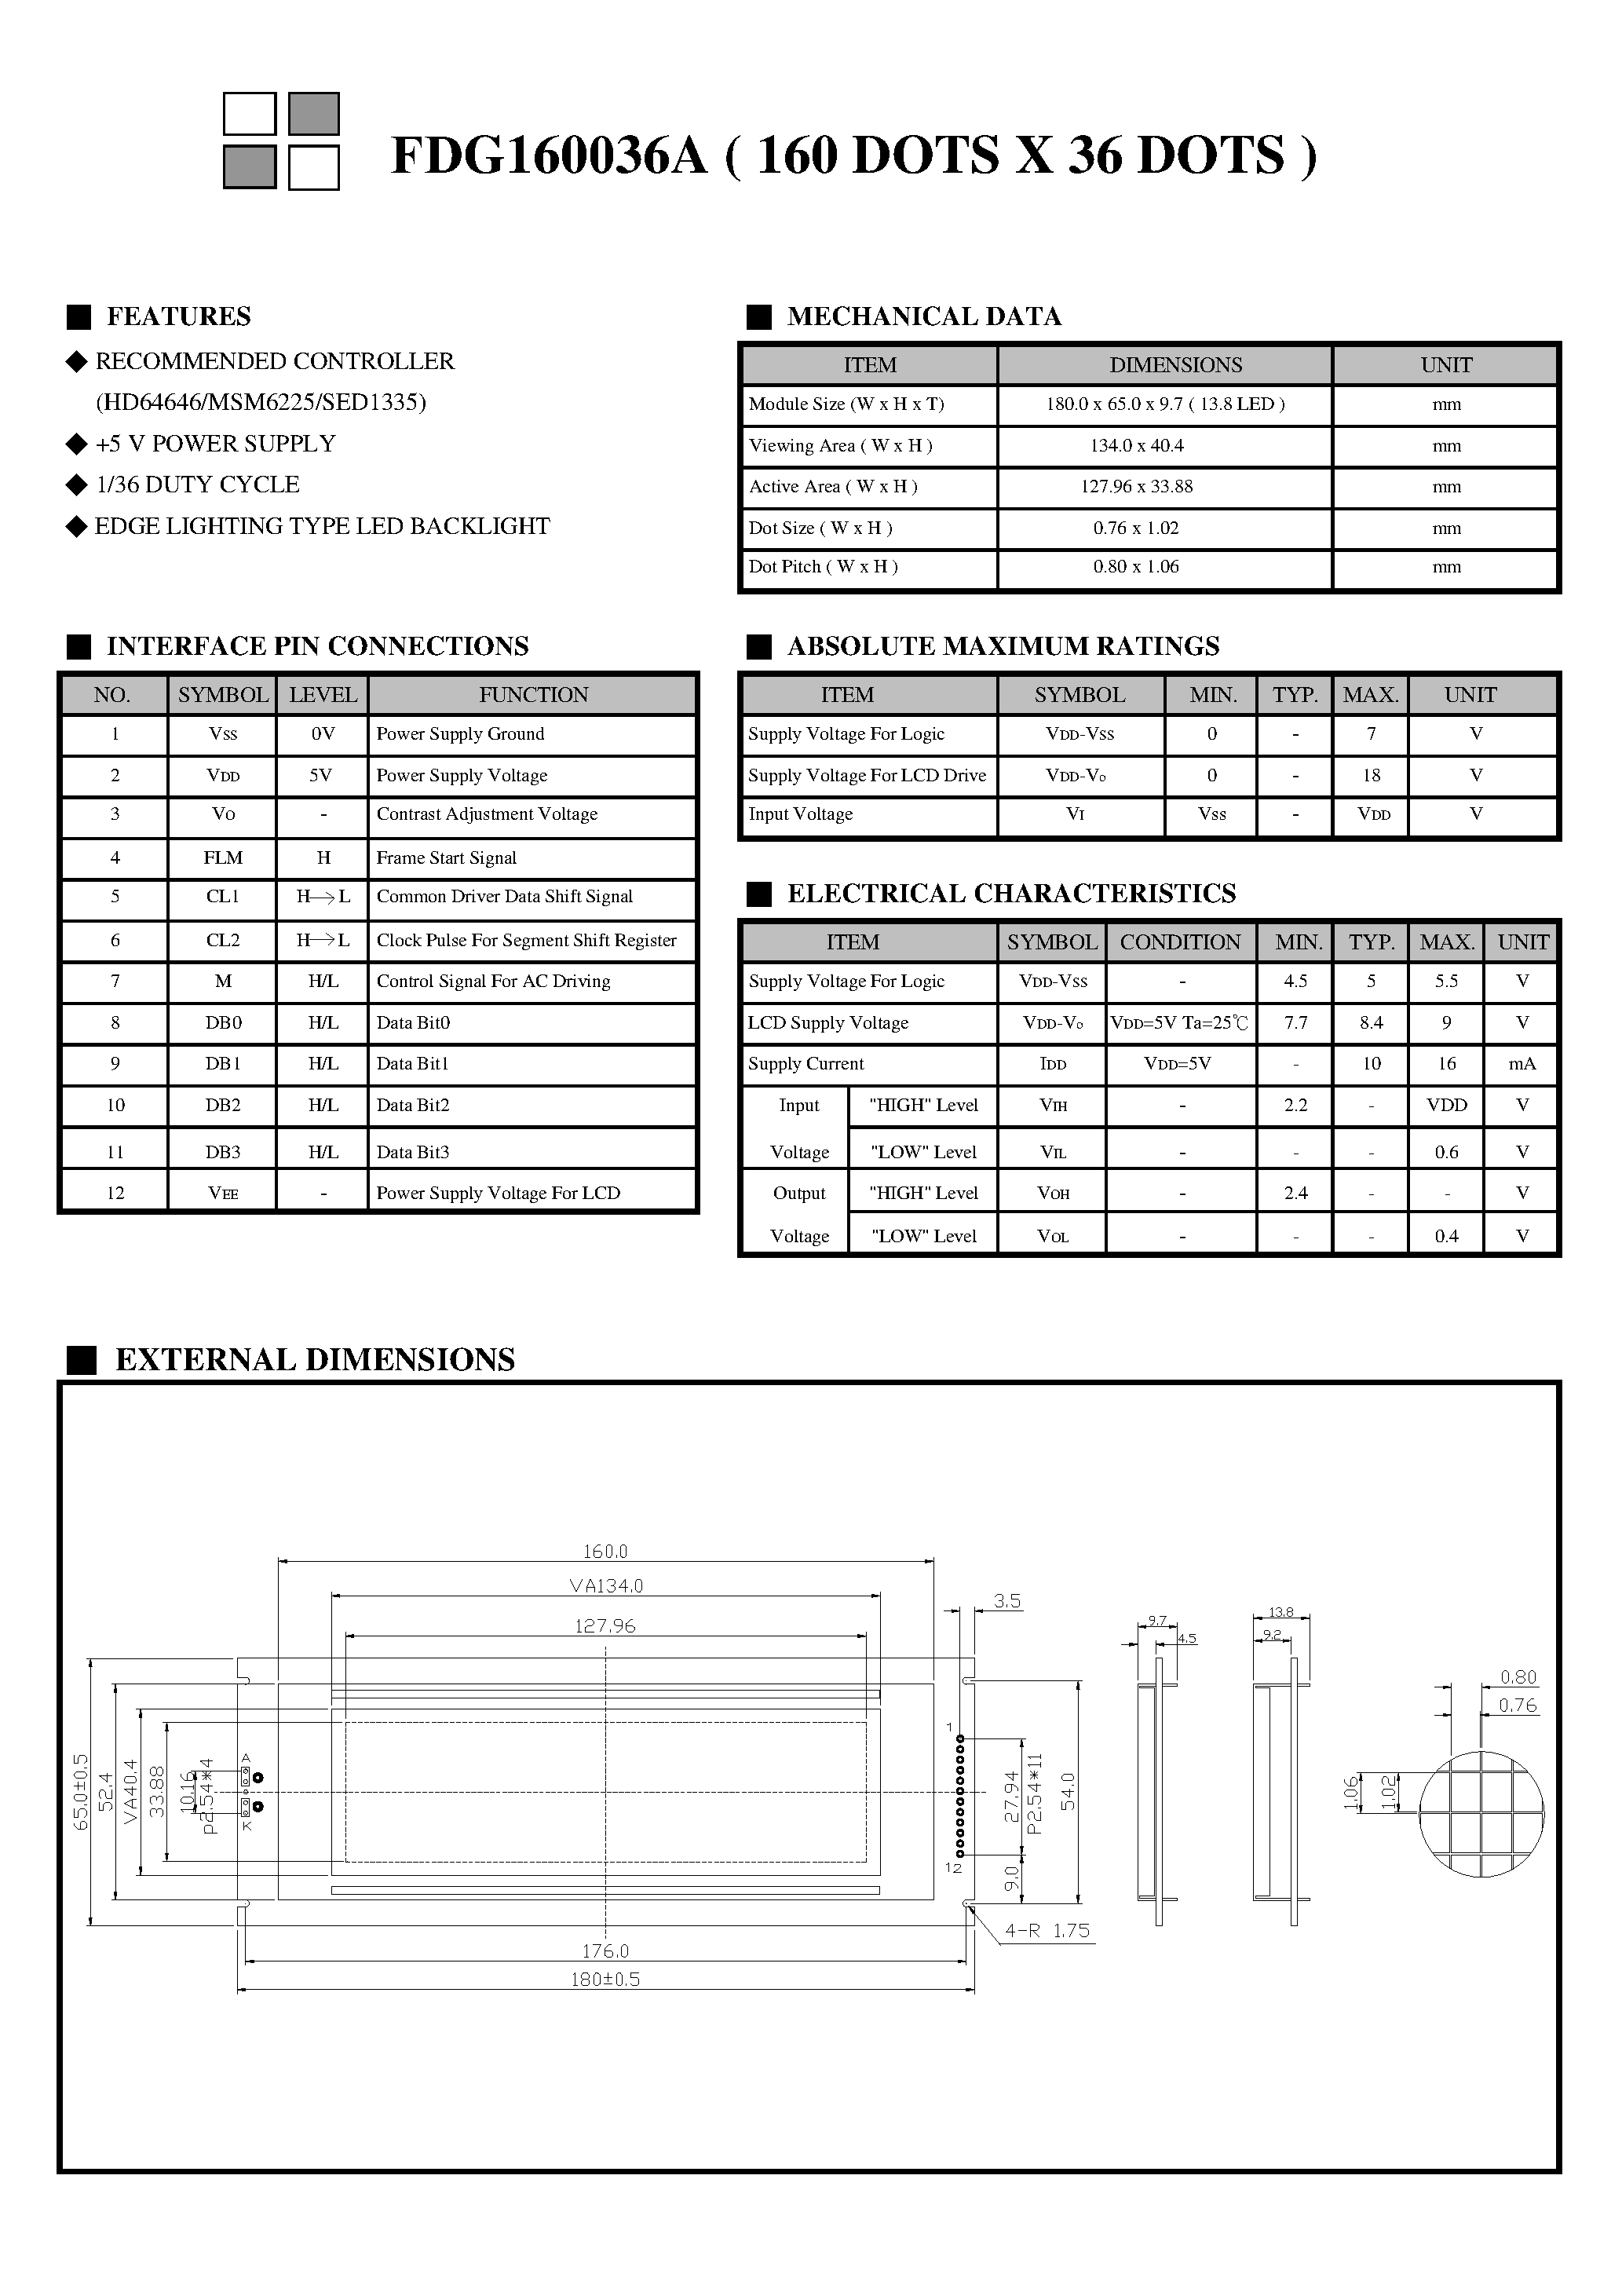 Datasheet FDG160036A - Monochrome Lcd Module page 2